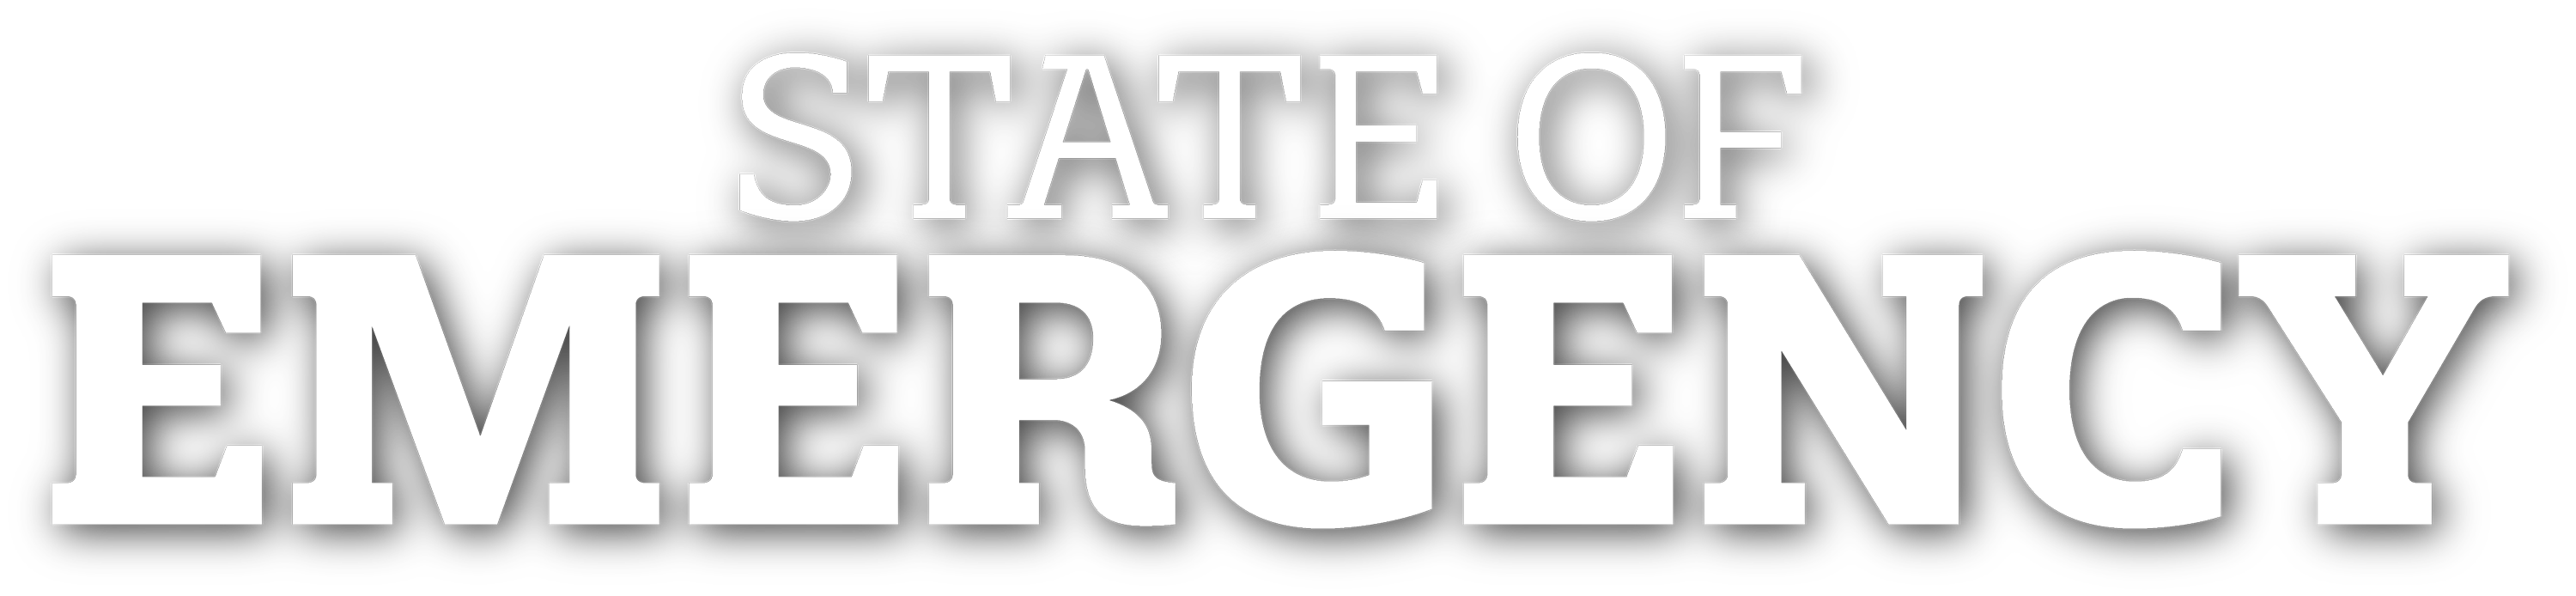 News21 State of Emergency logo